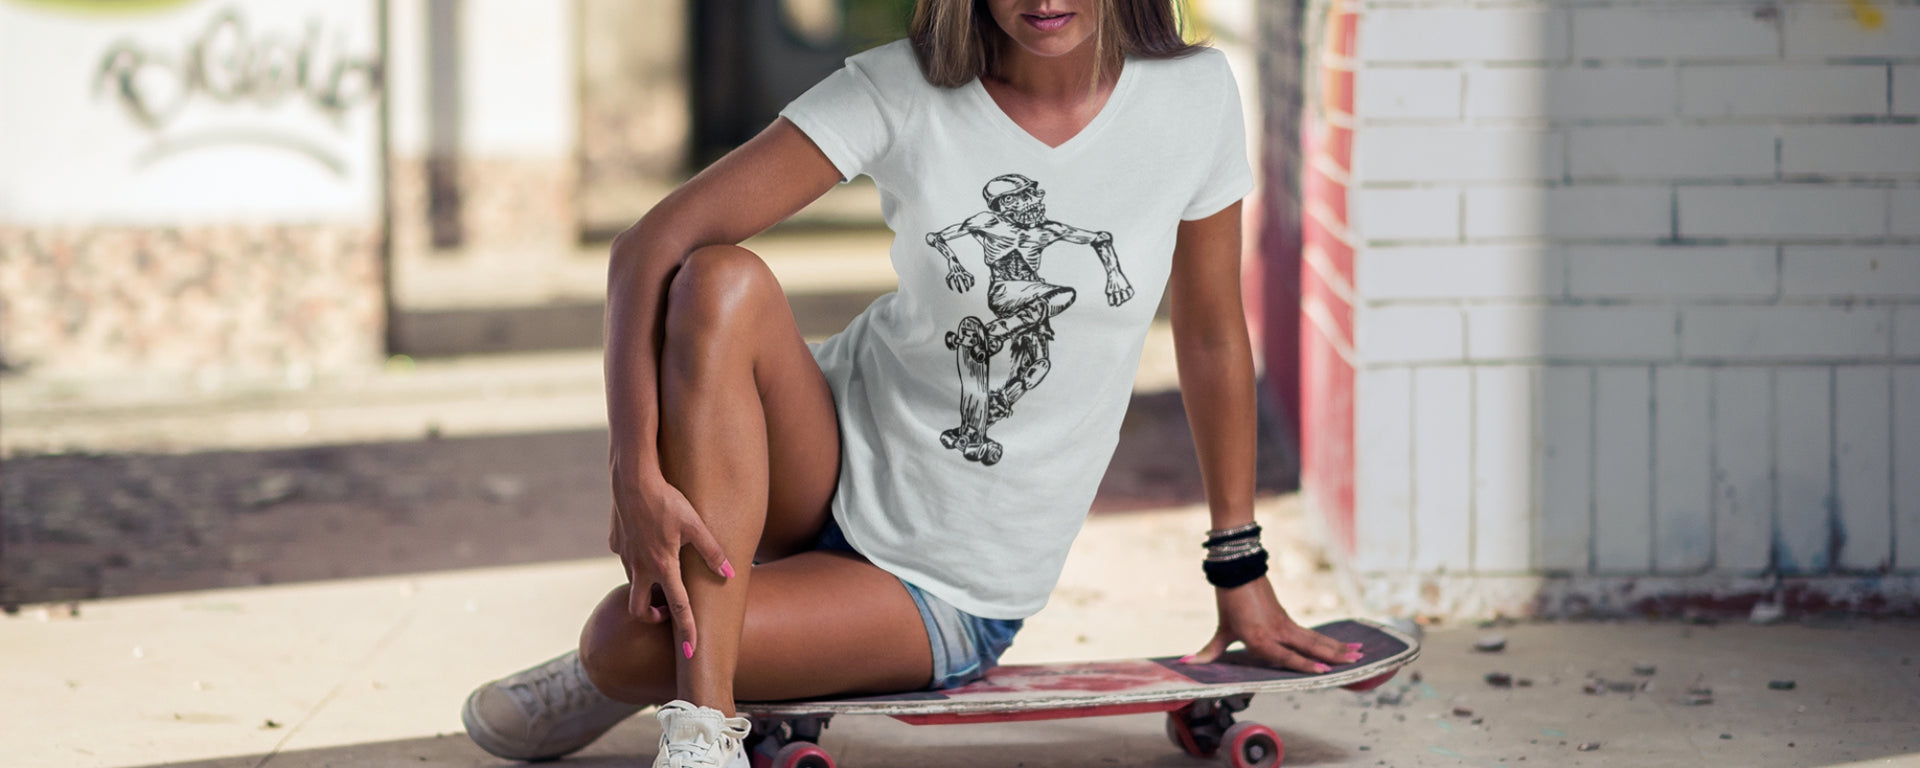 seembo-t-shirt-zombie-skating-woman-sitting-on-a-skateboard